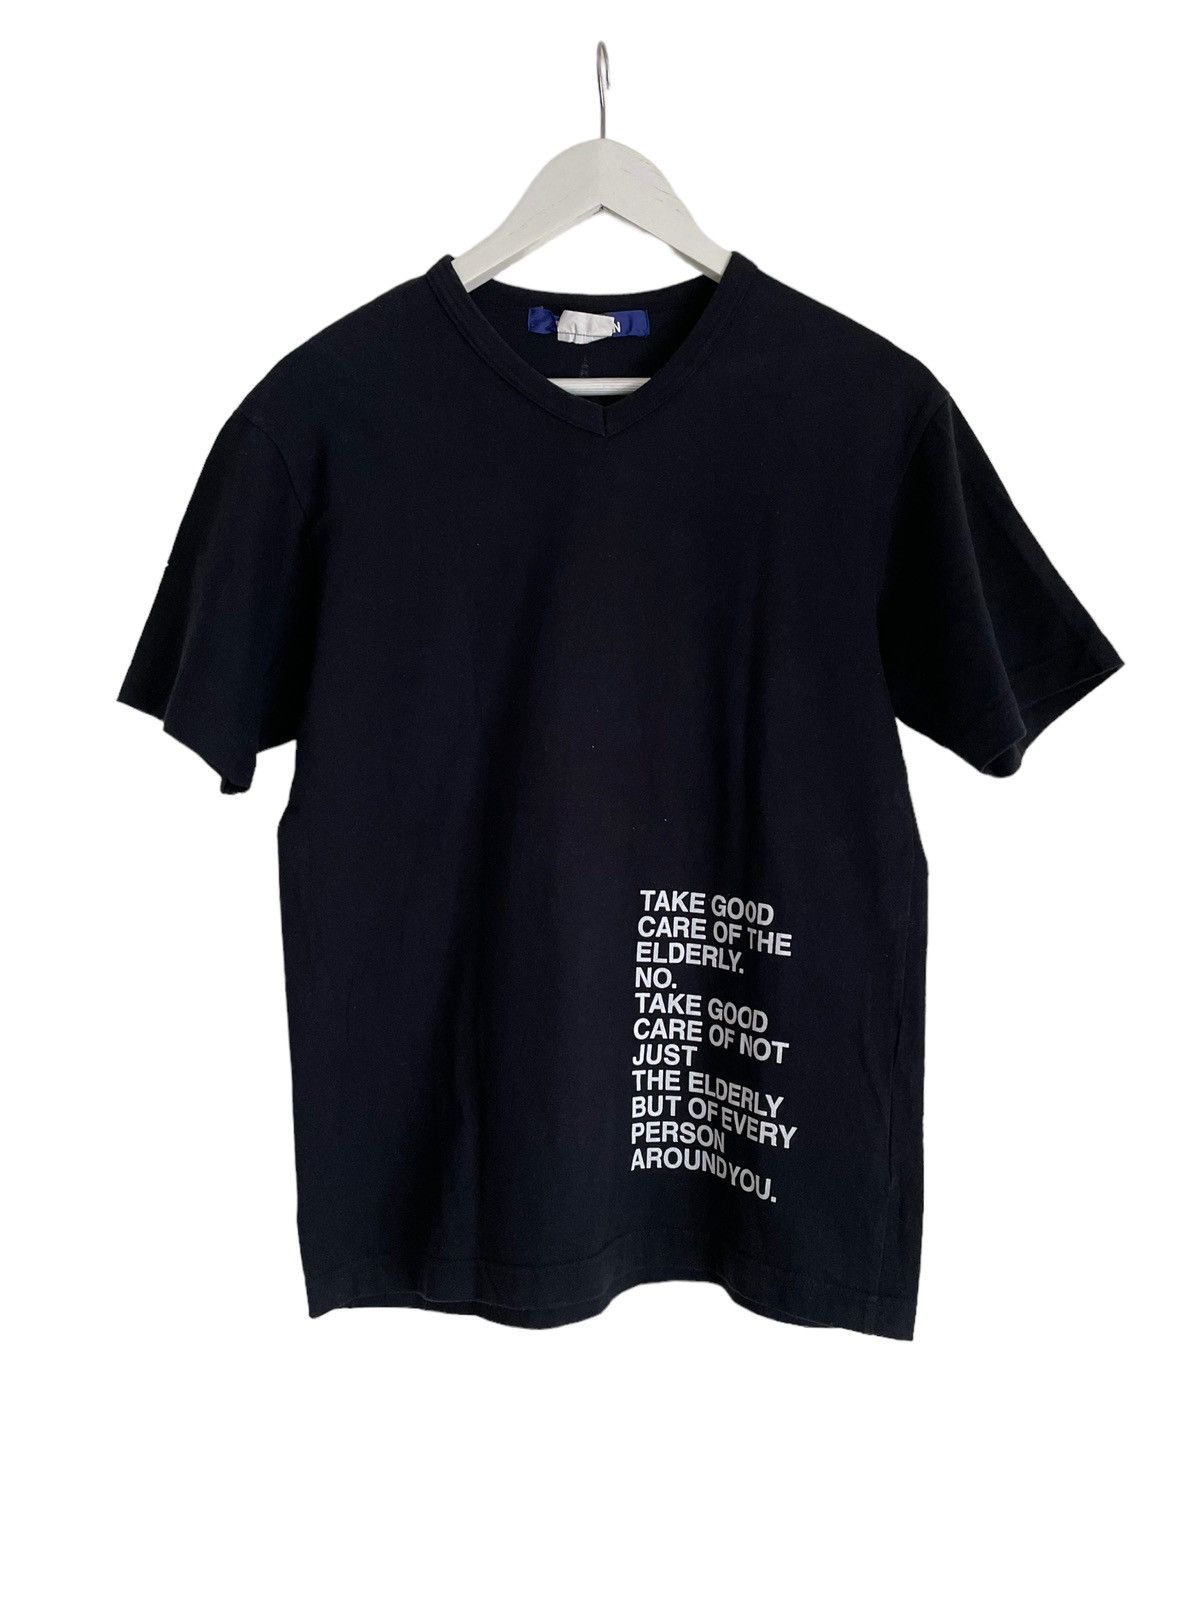 Junya Watanabe Junya Watanabe 2001 Poem T-Shirt | Grailed